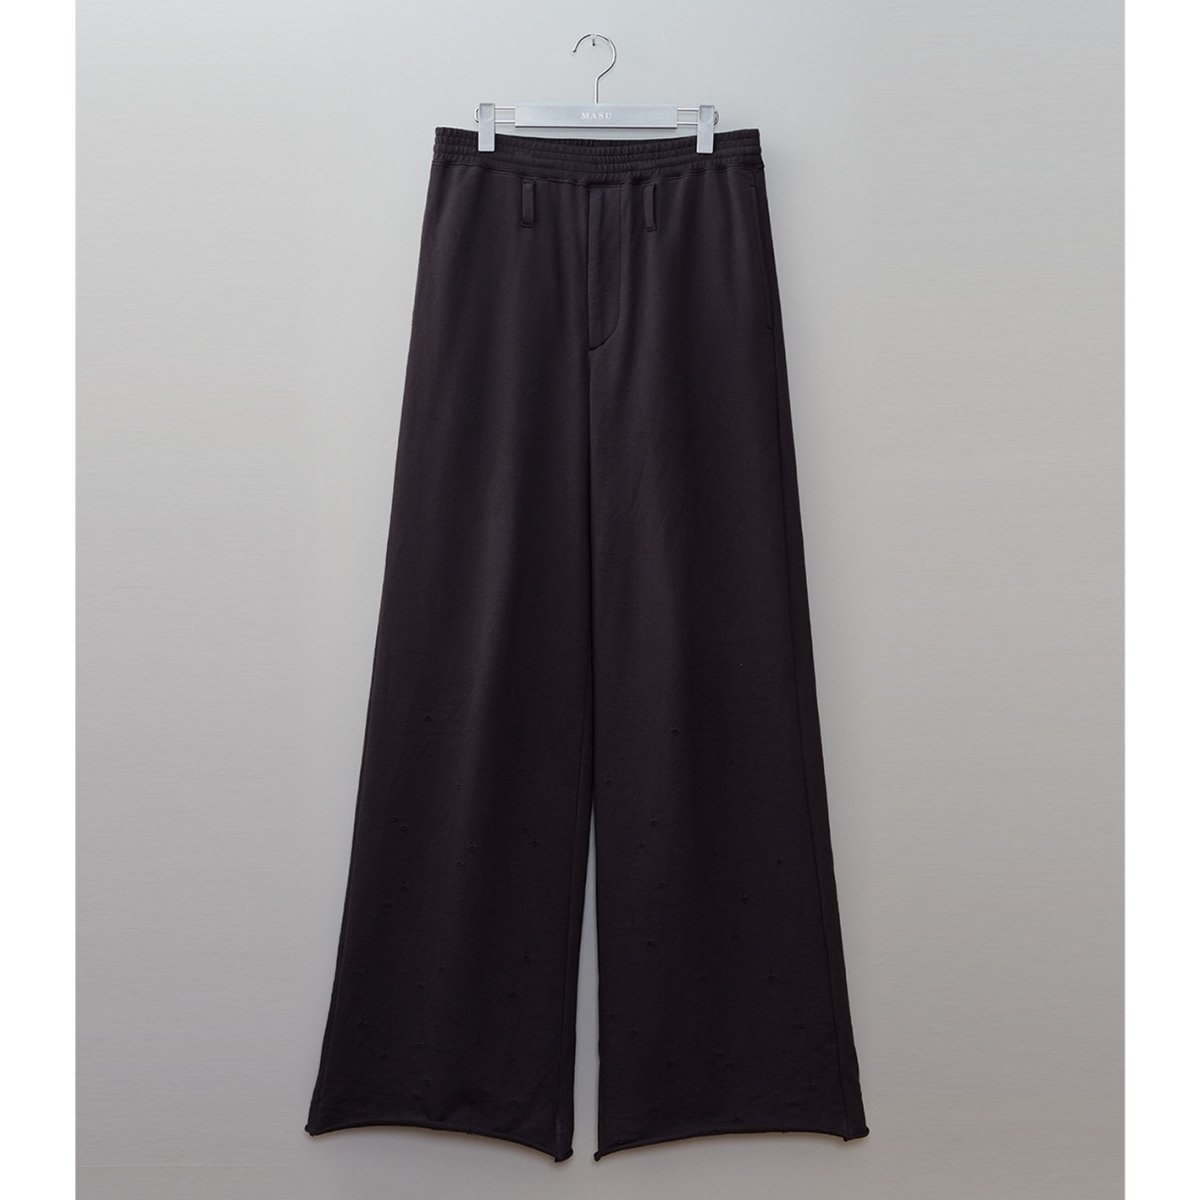 MASU / BAGGY SWEAT PANTS-MASUの通販EQUAL